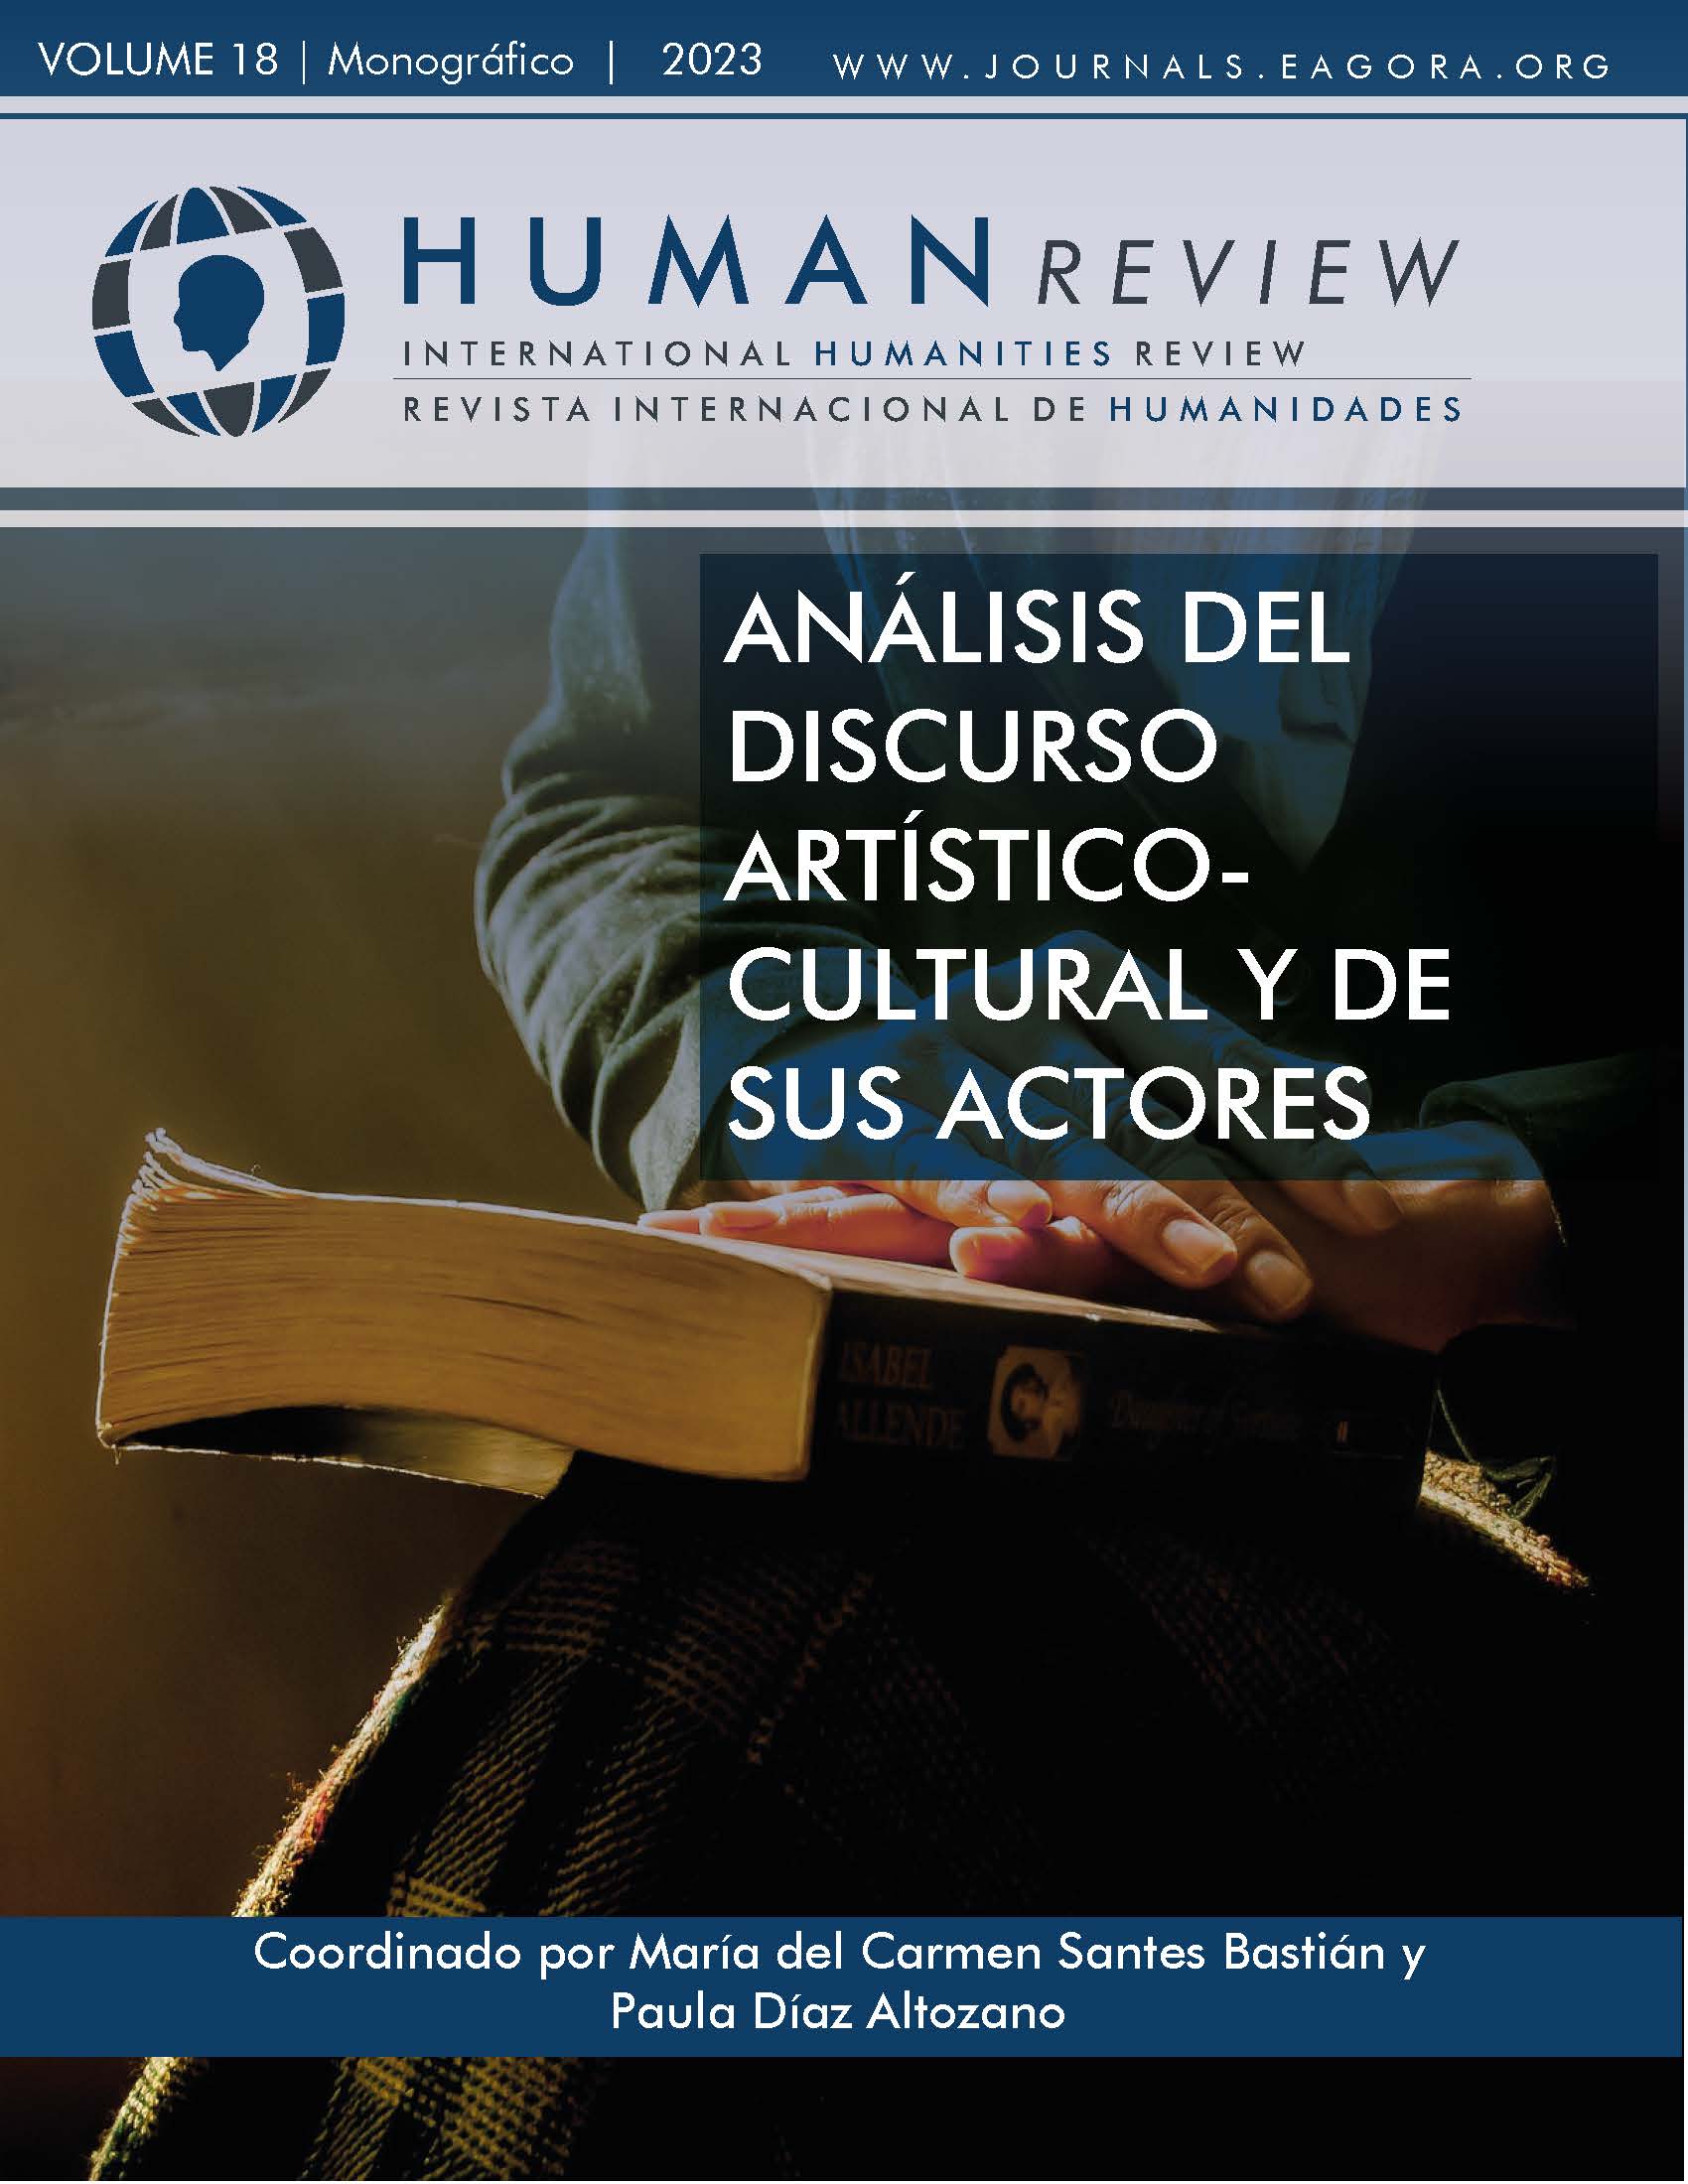 					Visualizar v. 18 n. 4 (2023): Monografía: "Análise do discurso artístico-cultural e seus atores"
				